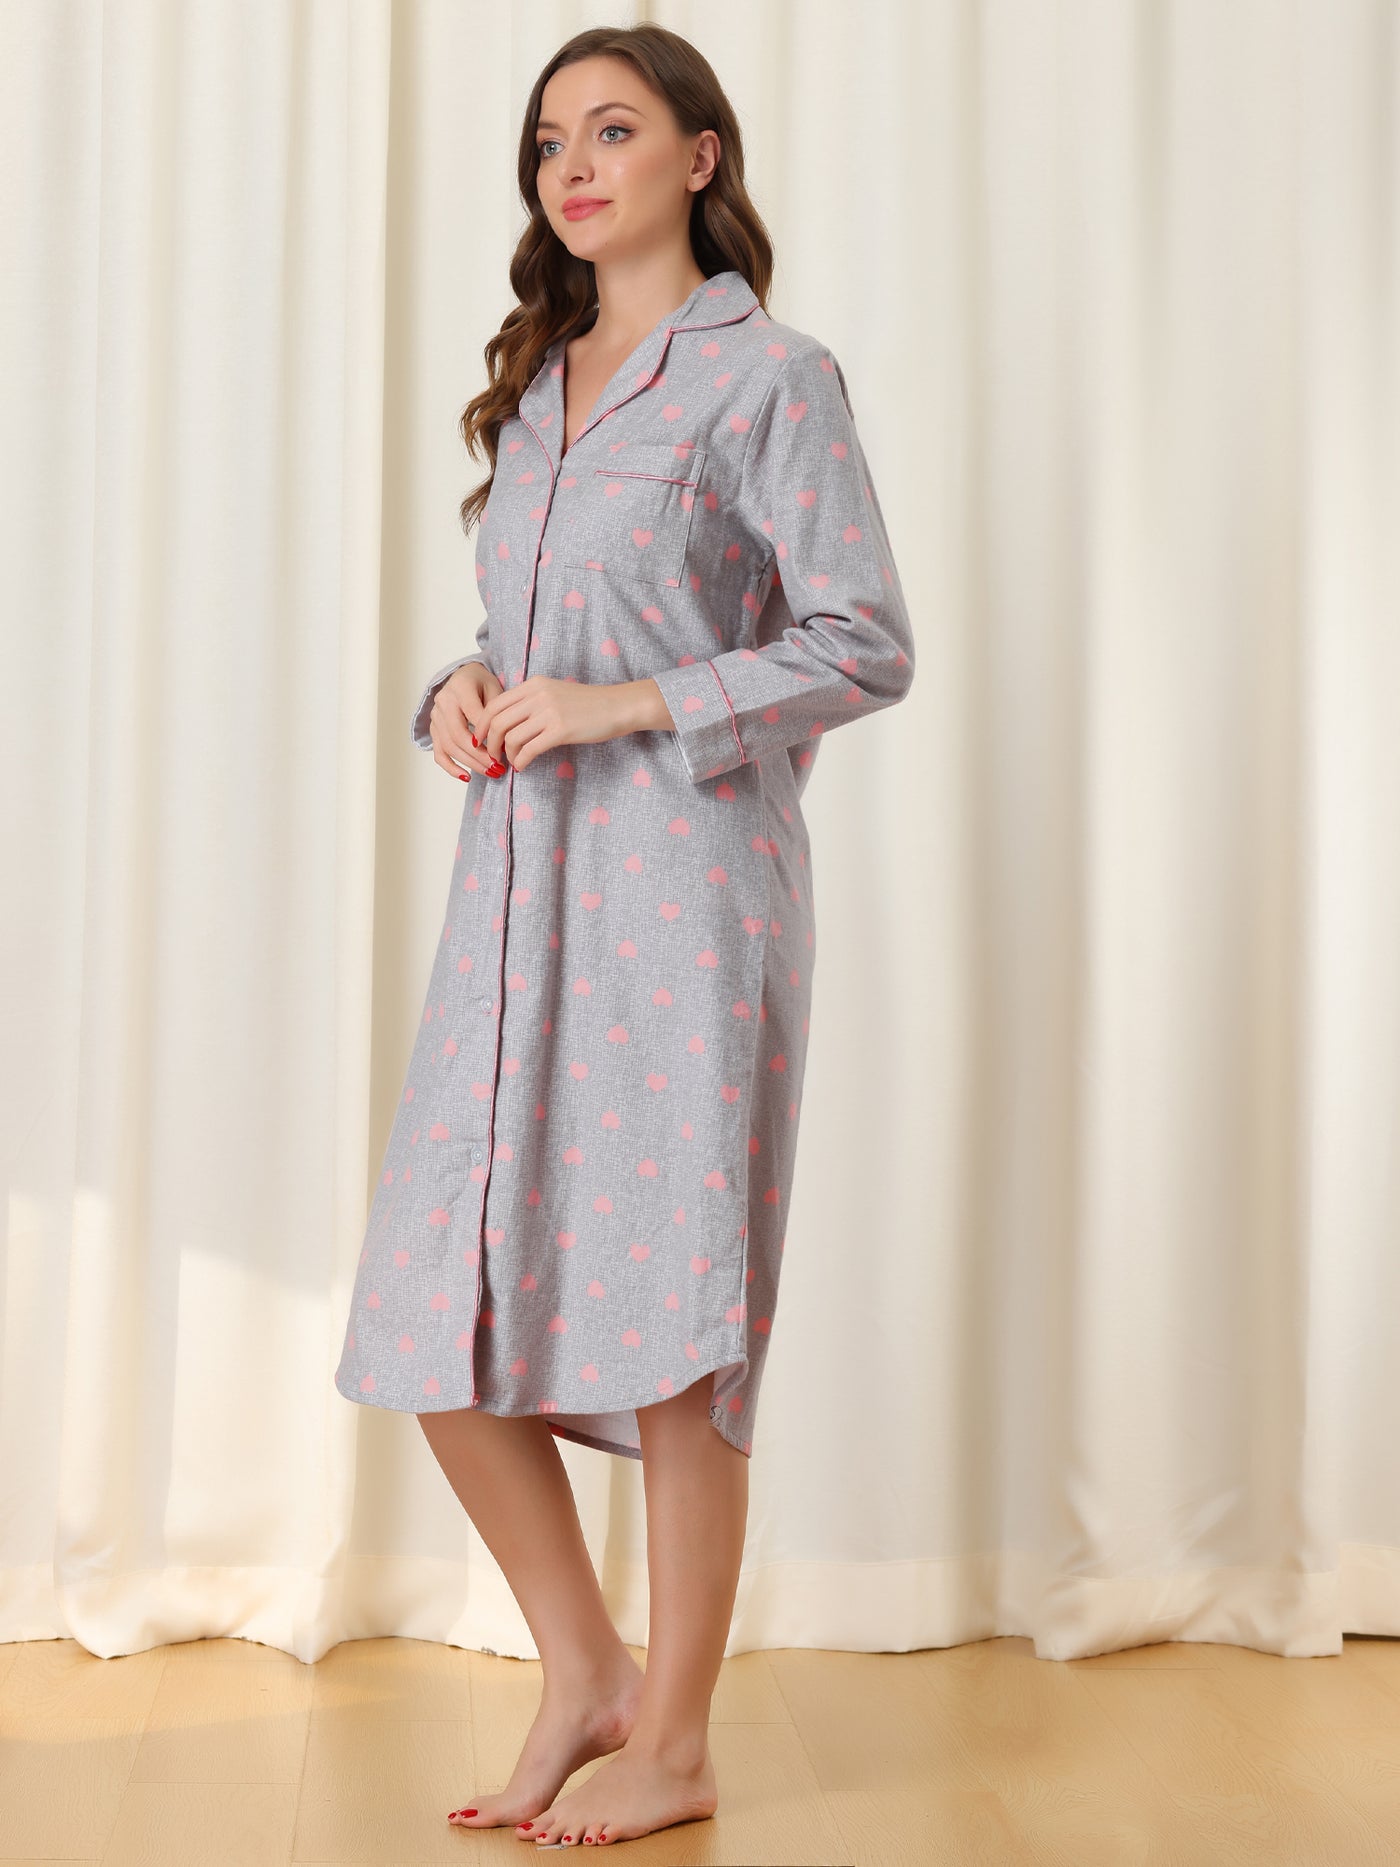 Bublédon Womens Plaid Heart Printed Shirtdress Sleepshirt Loungewear Pajama Shirt Dress